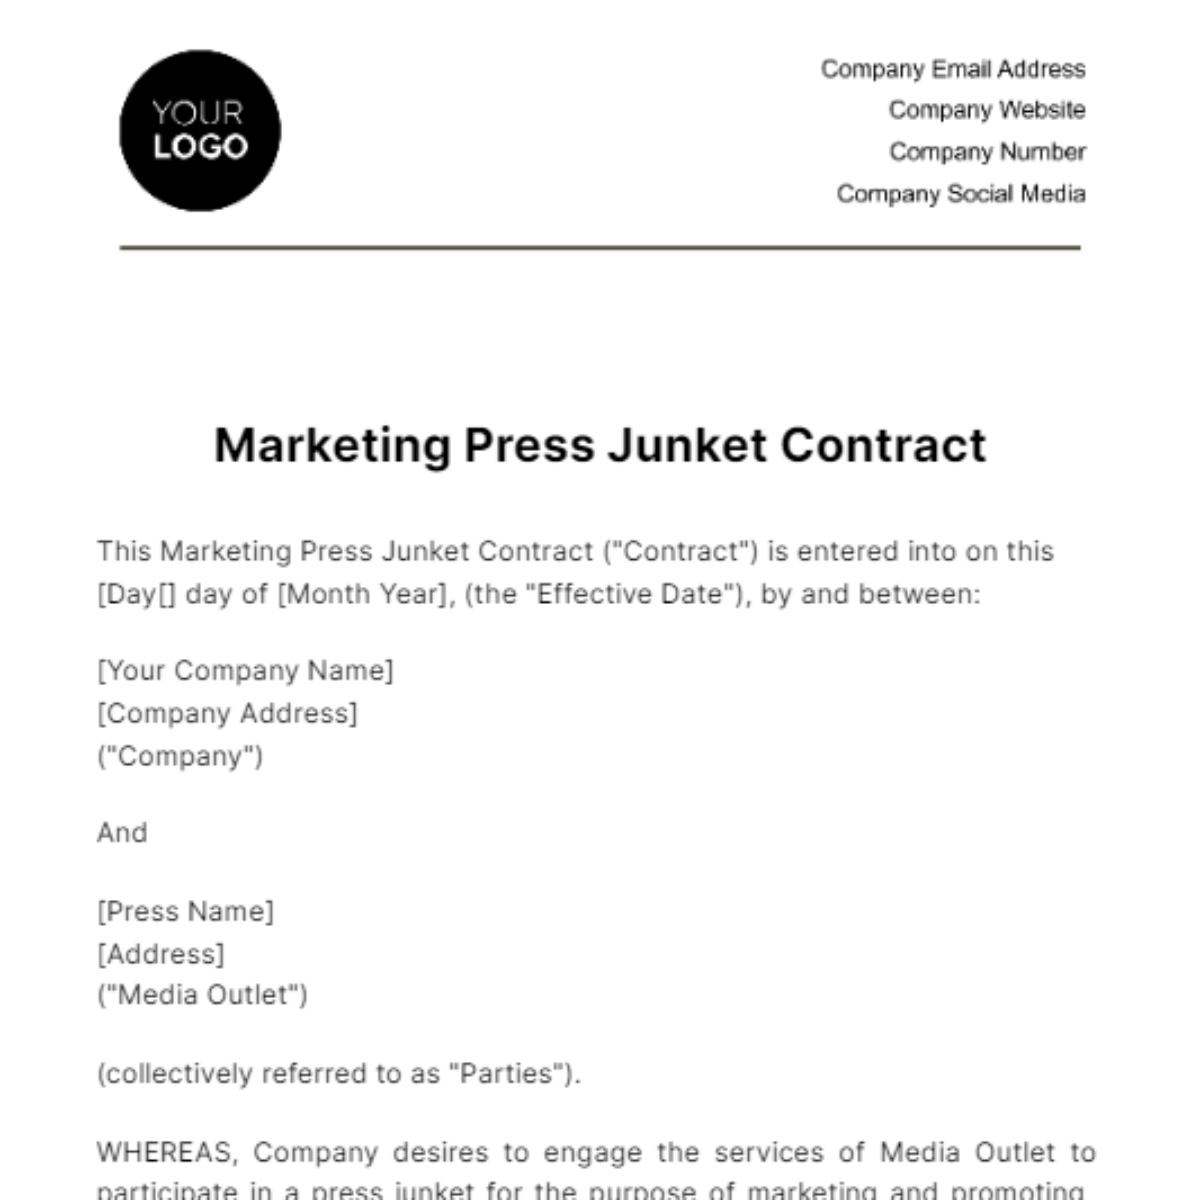 Marketing Press Junket Contract Template